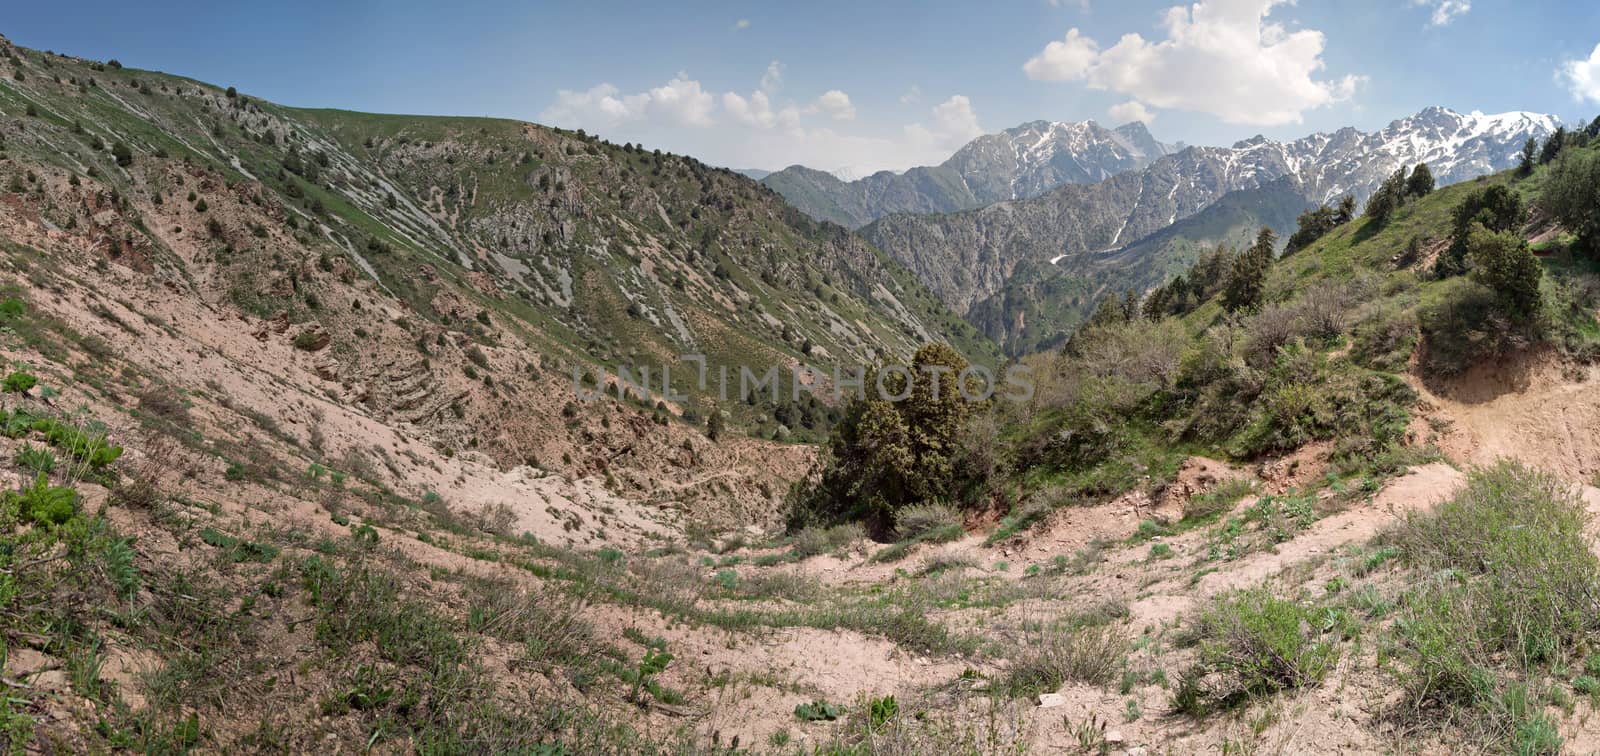 Chimgan mountains, Uzbekistan by Goodday